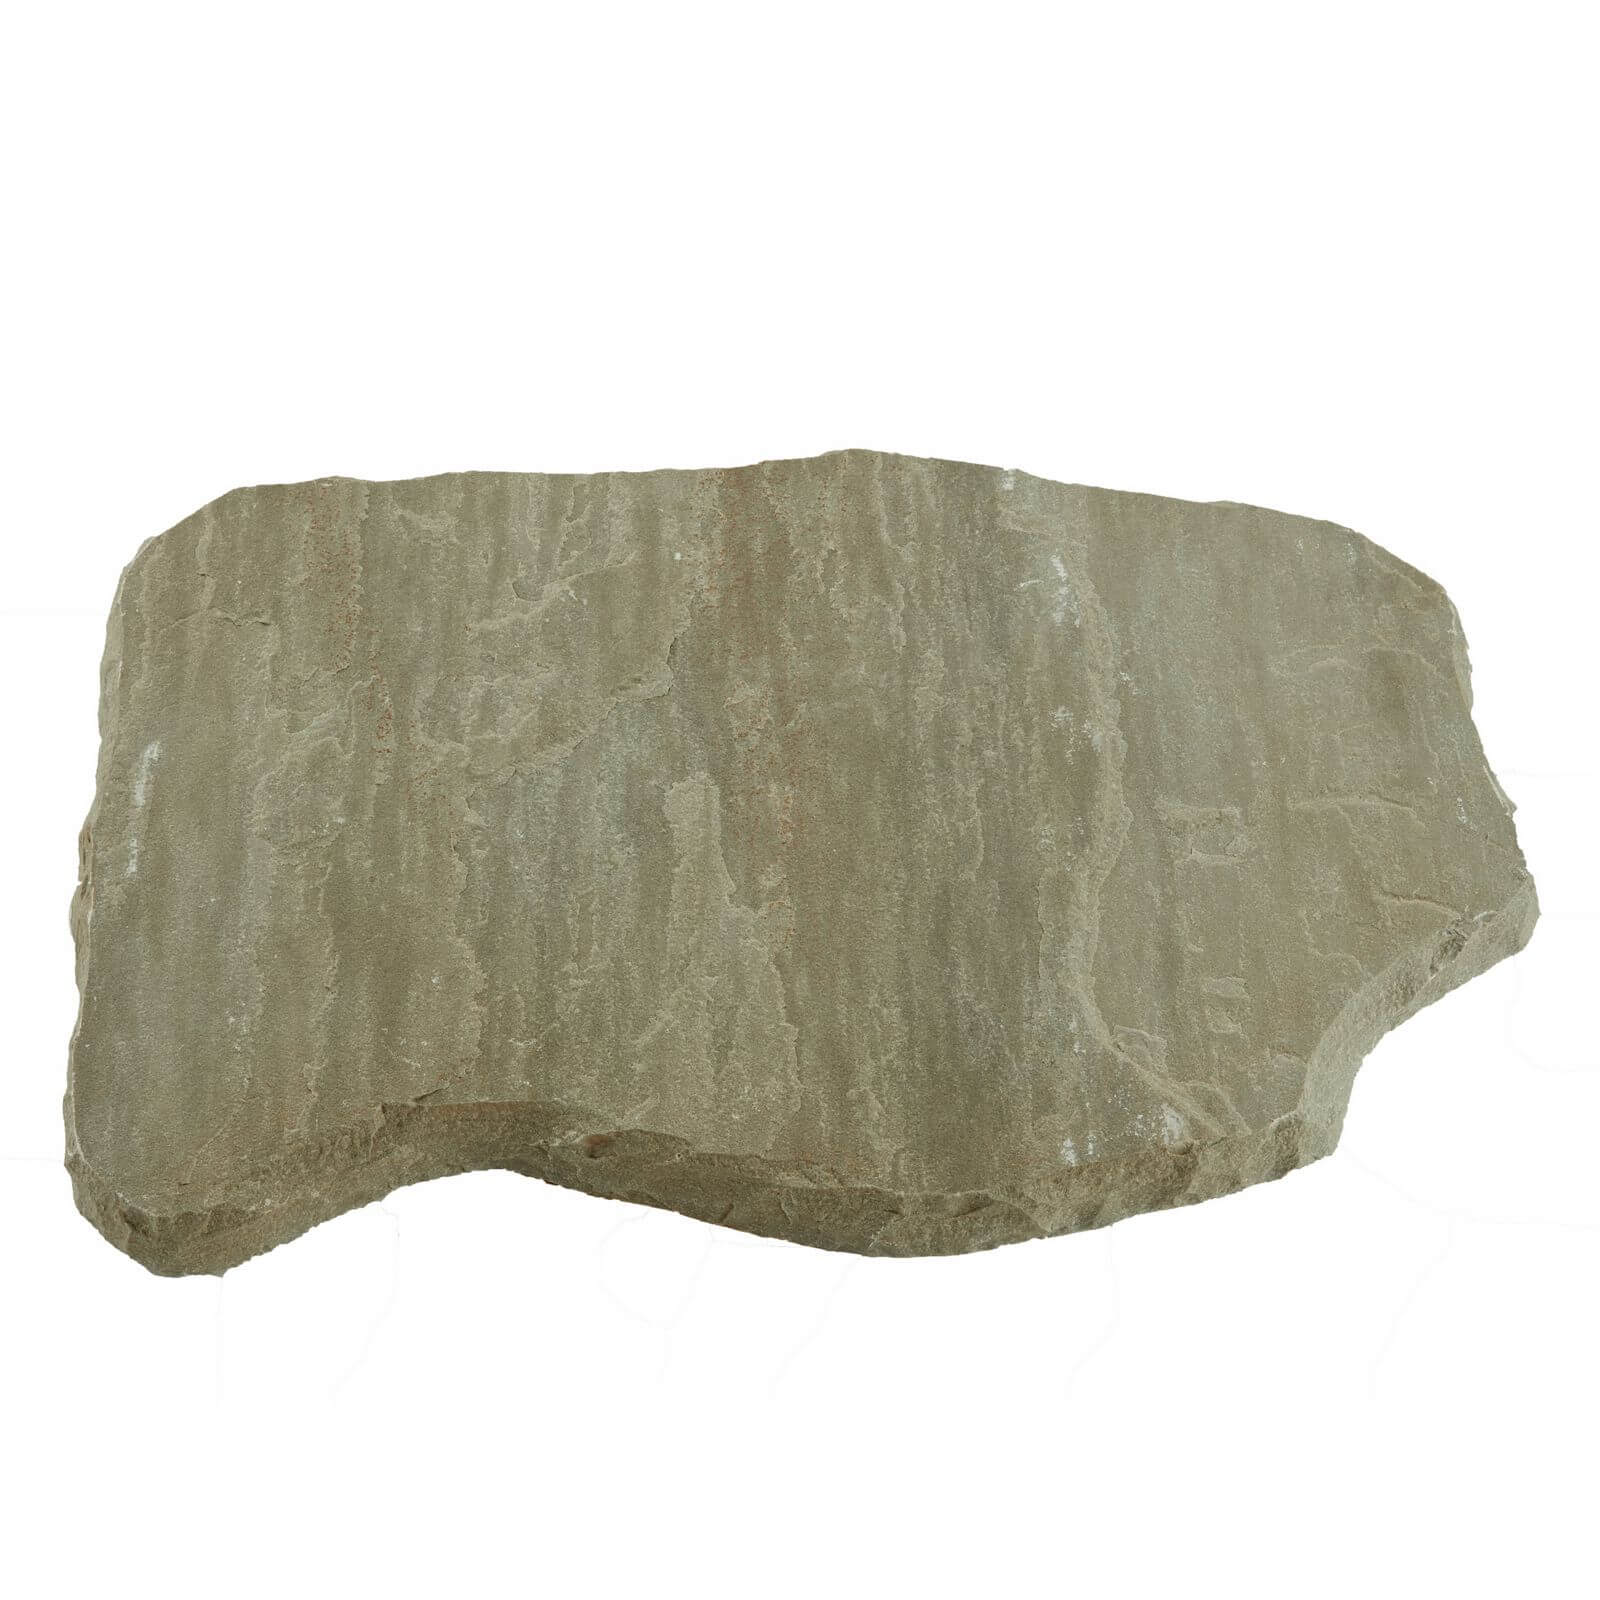 Stylish Stone Natural Random Stepping Stone 600x400mm - Lakefell